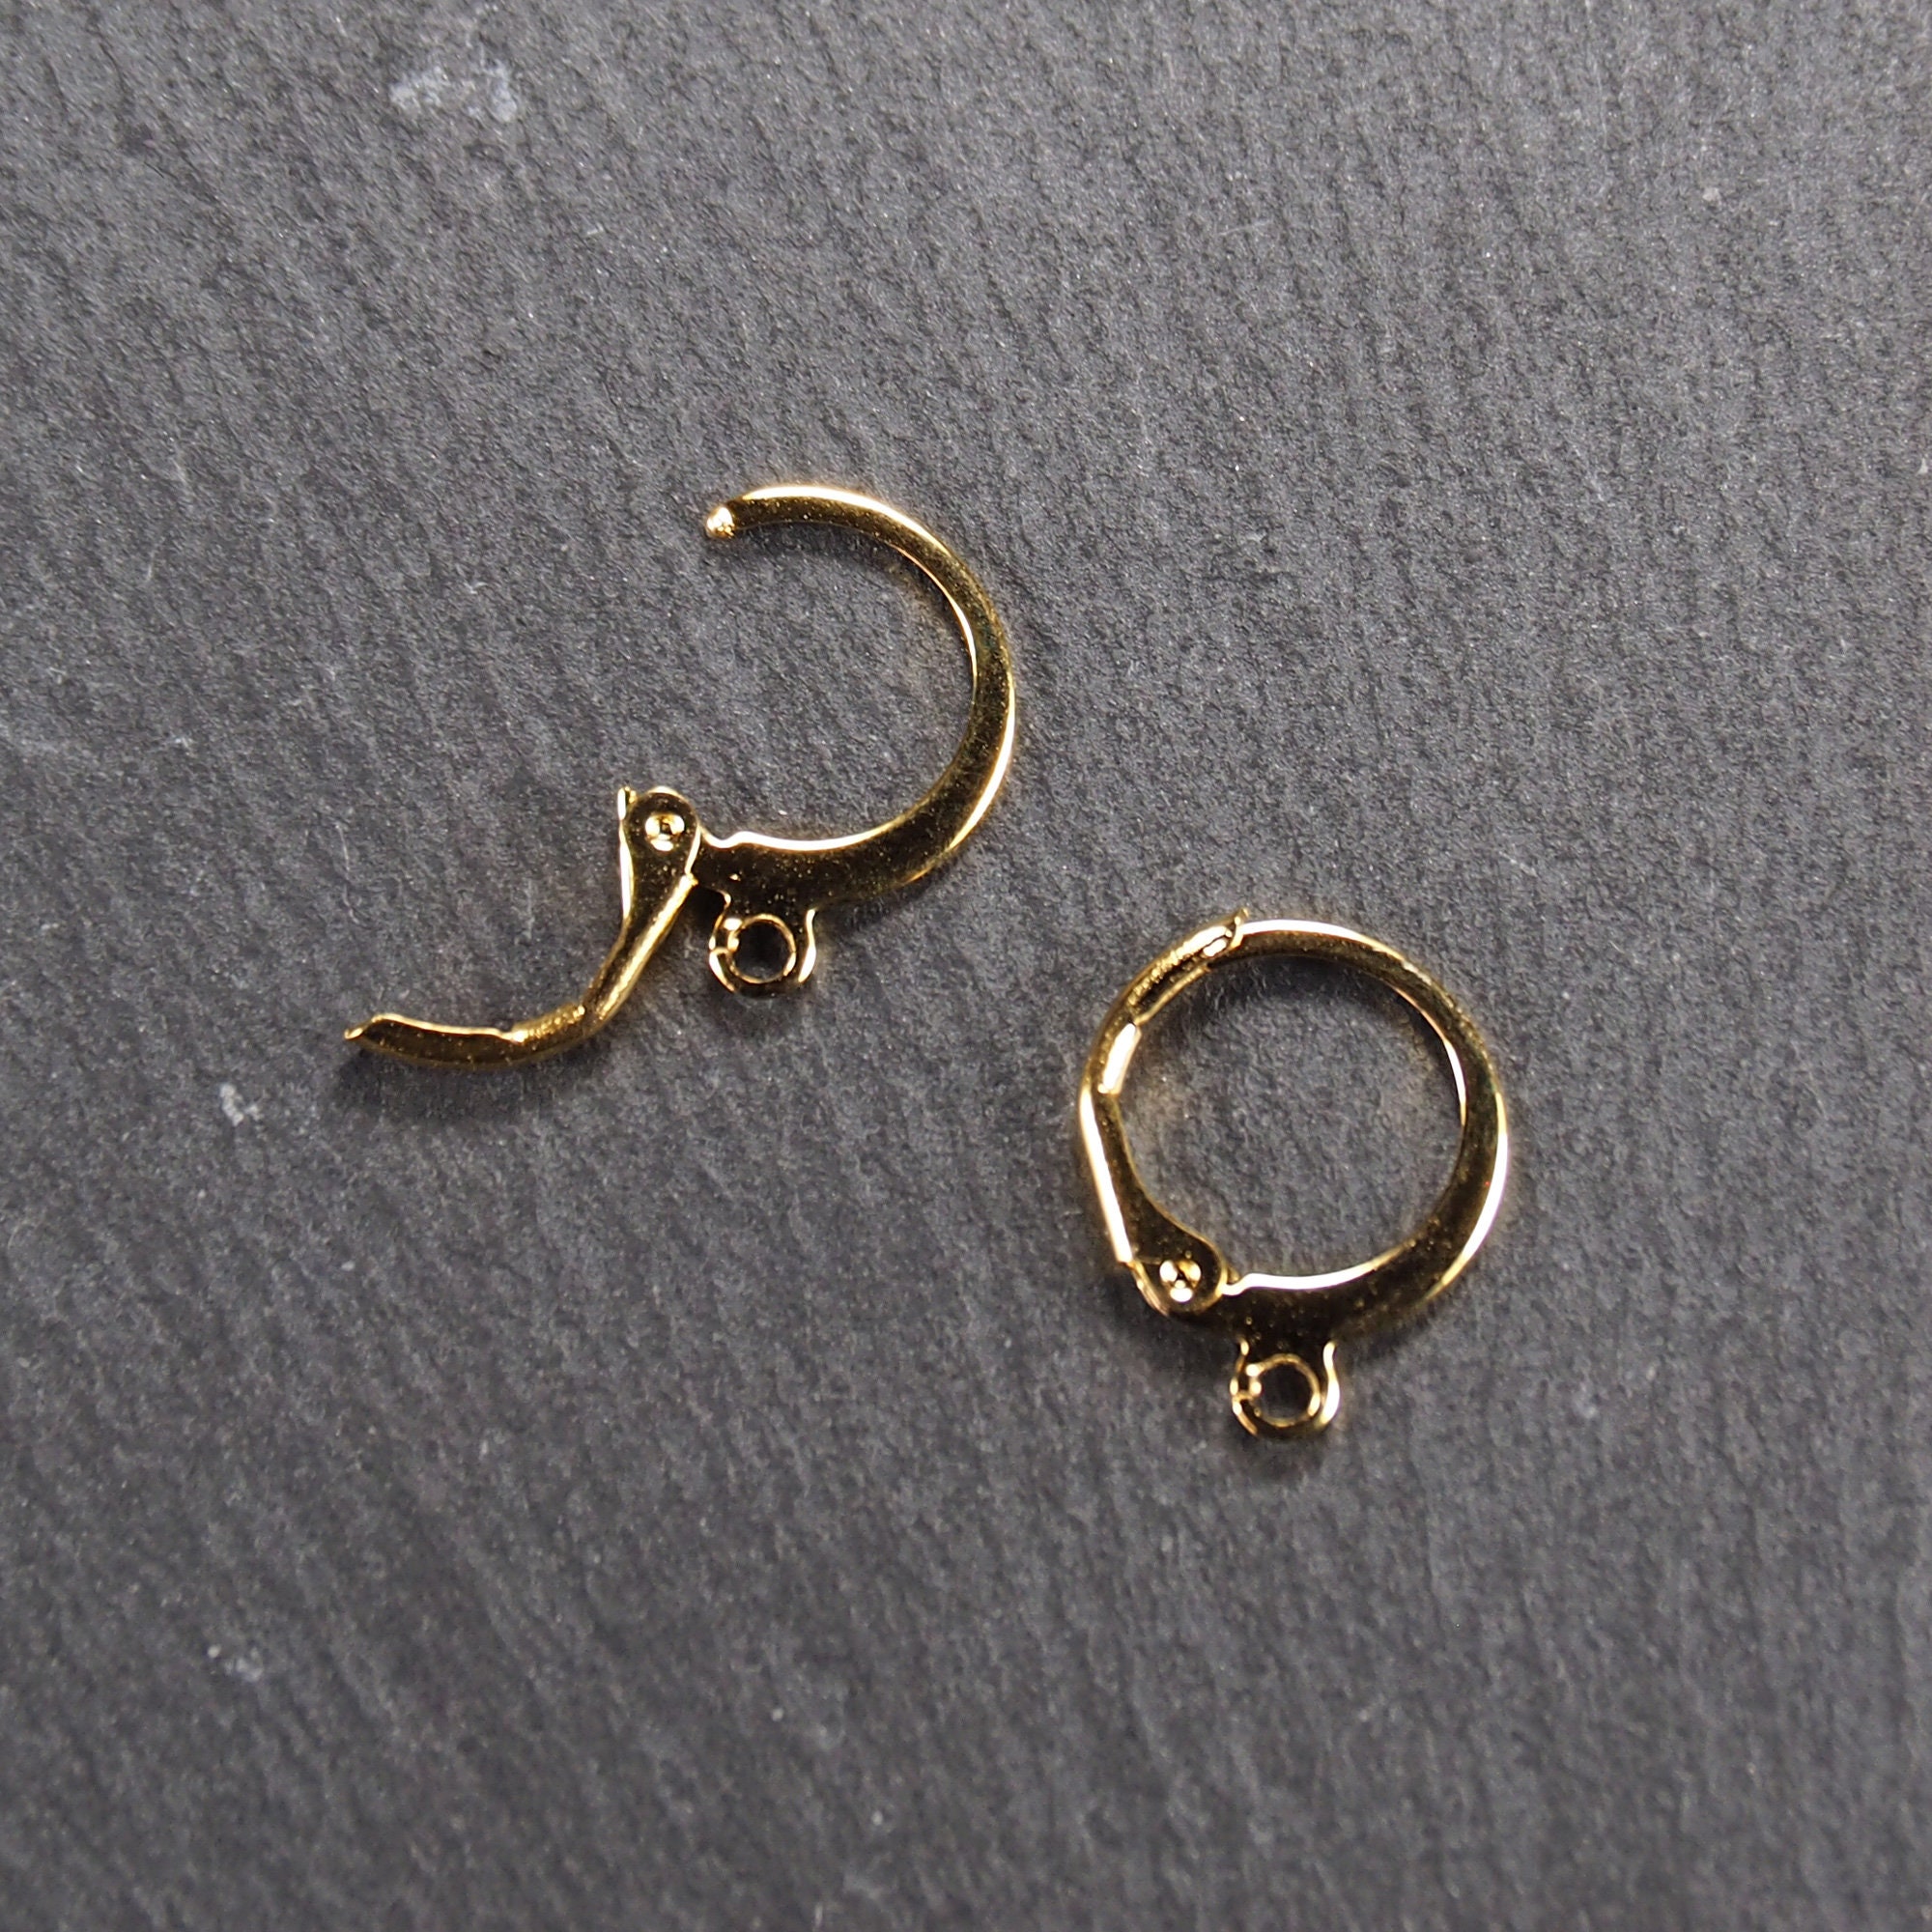 16mm 24k Shiny Gold Earrings, Leverback Earrings, Leverback Ear Hooks, Hoop  Earrings, Gold Earring Clasps, Gold Plated Findings, MBGMLS677